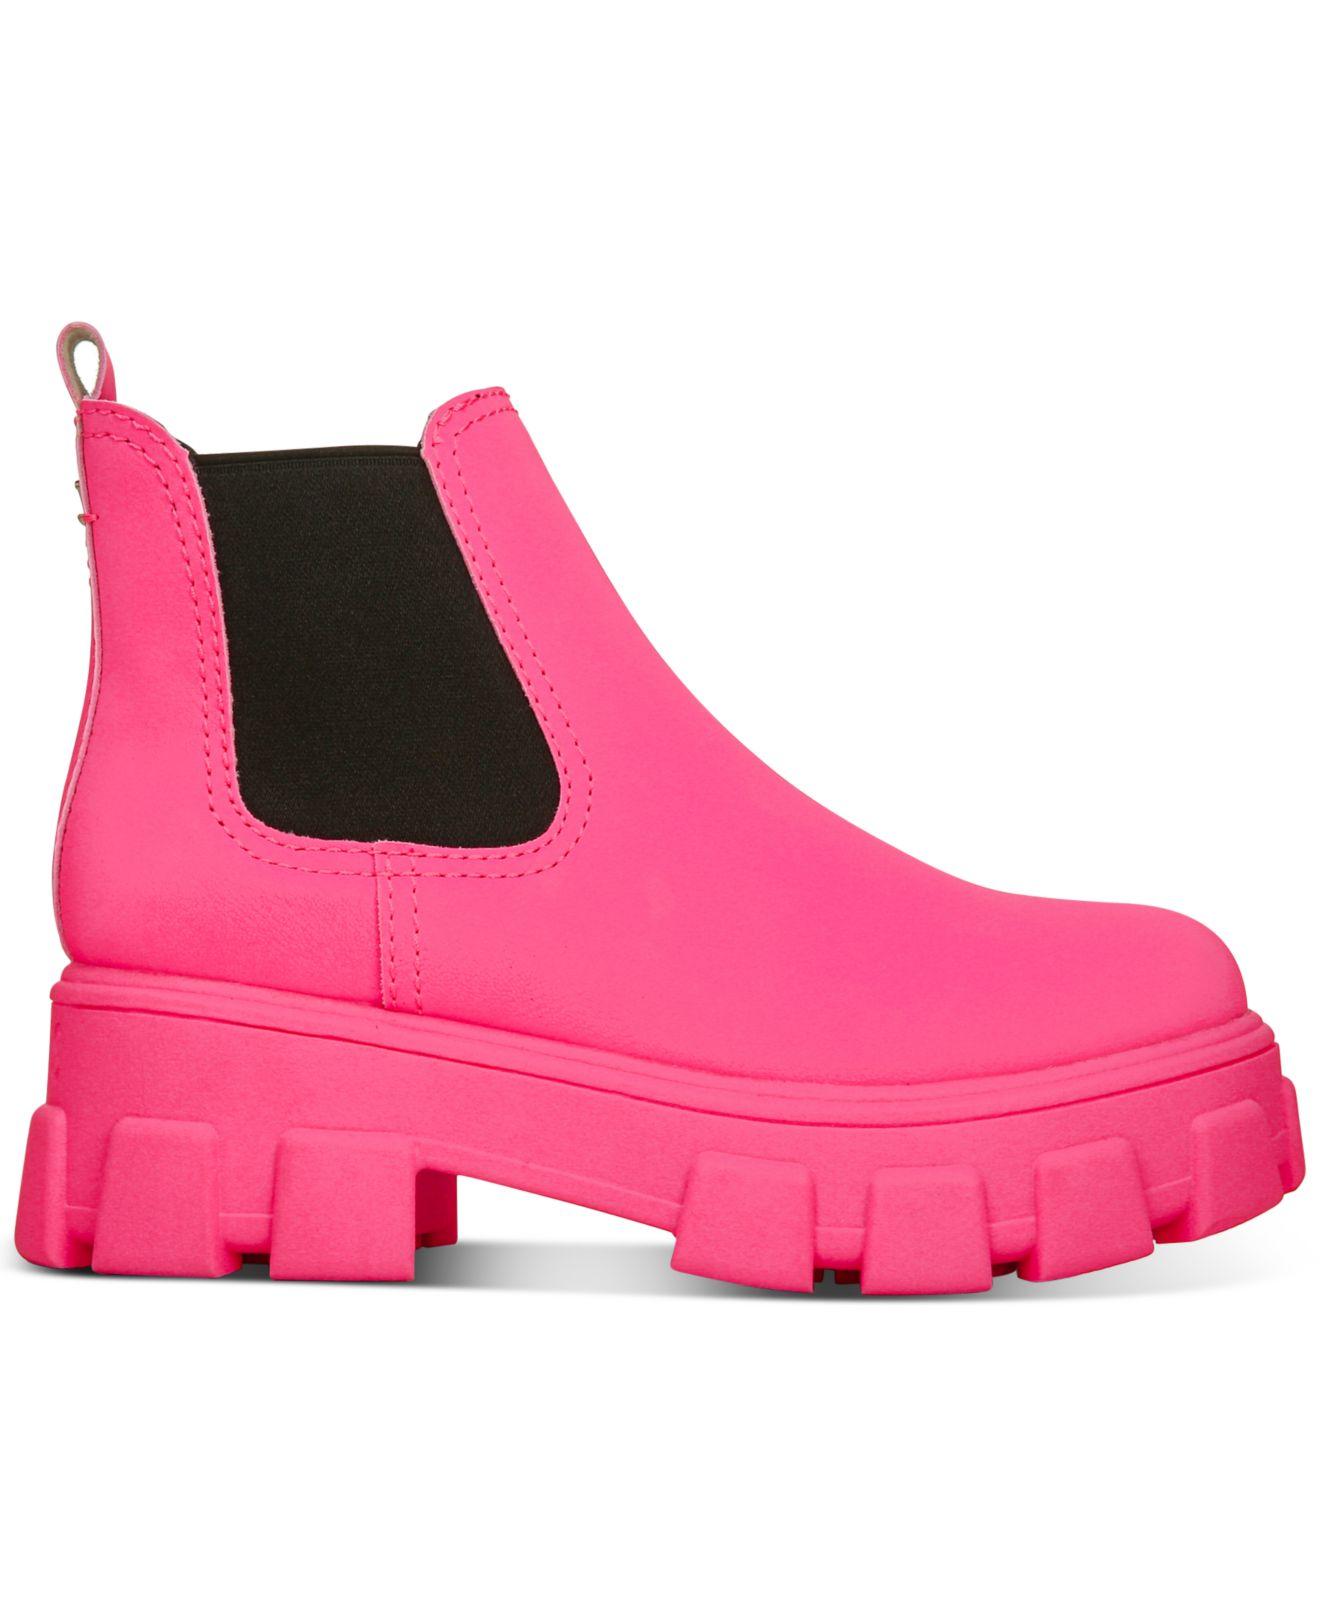 Circus Sam Edelman Darielle Lug Sole Chelsea Boots in Pink | Lyst